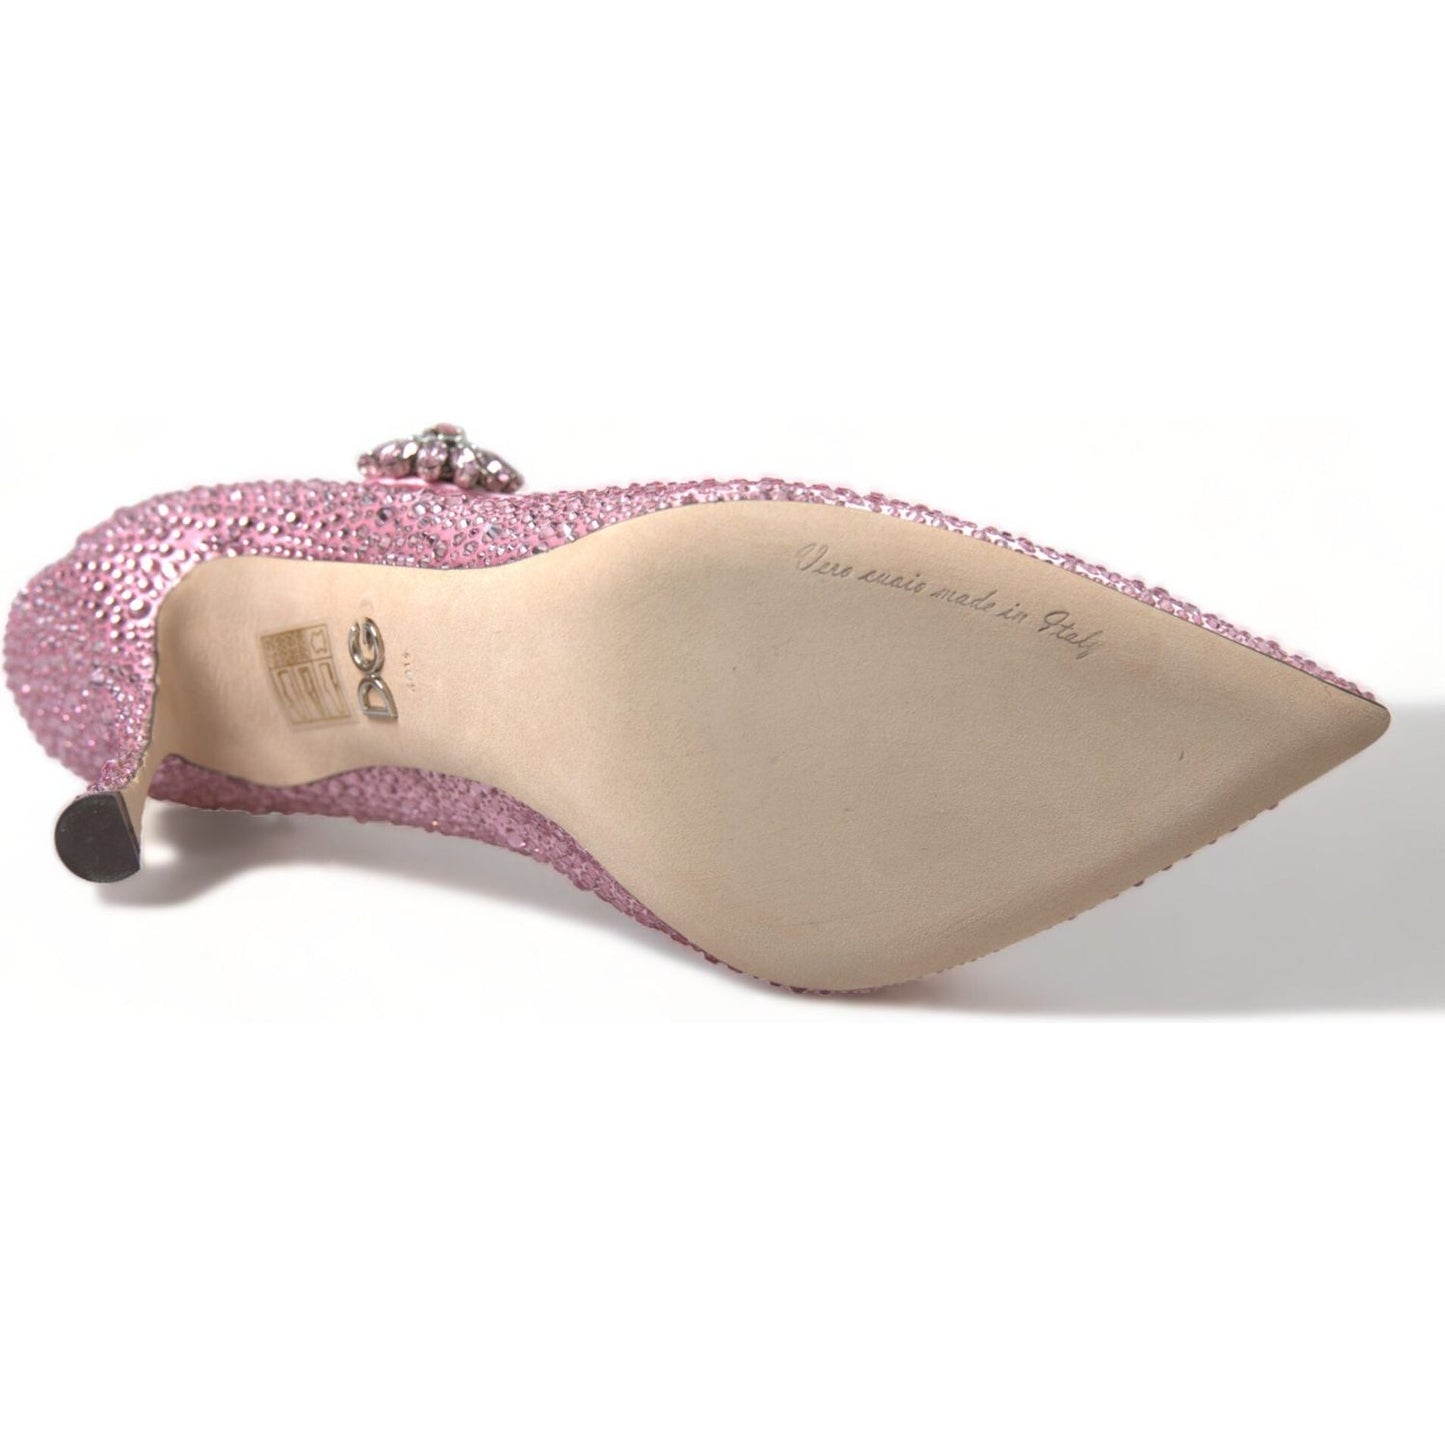 Dolce & Gabbana Enchanting Pink Crystal Pumps pink-strass-crystal-heels-pumps-shoes